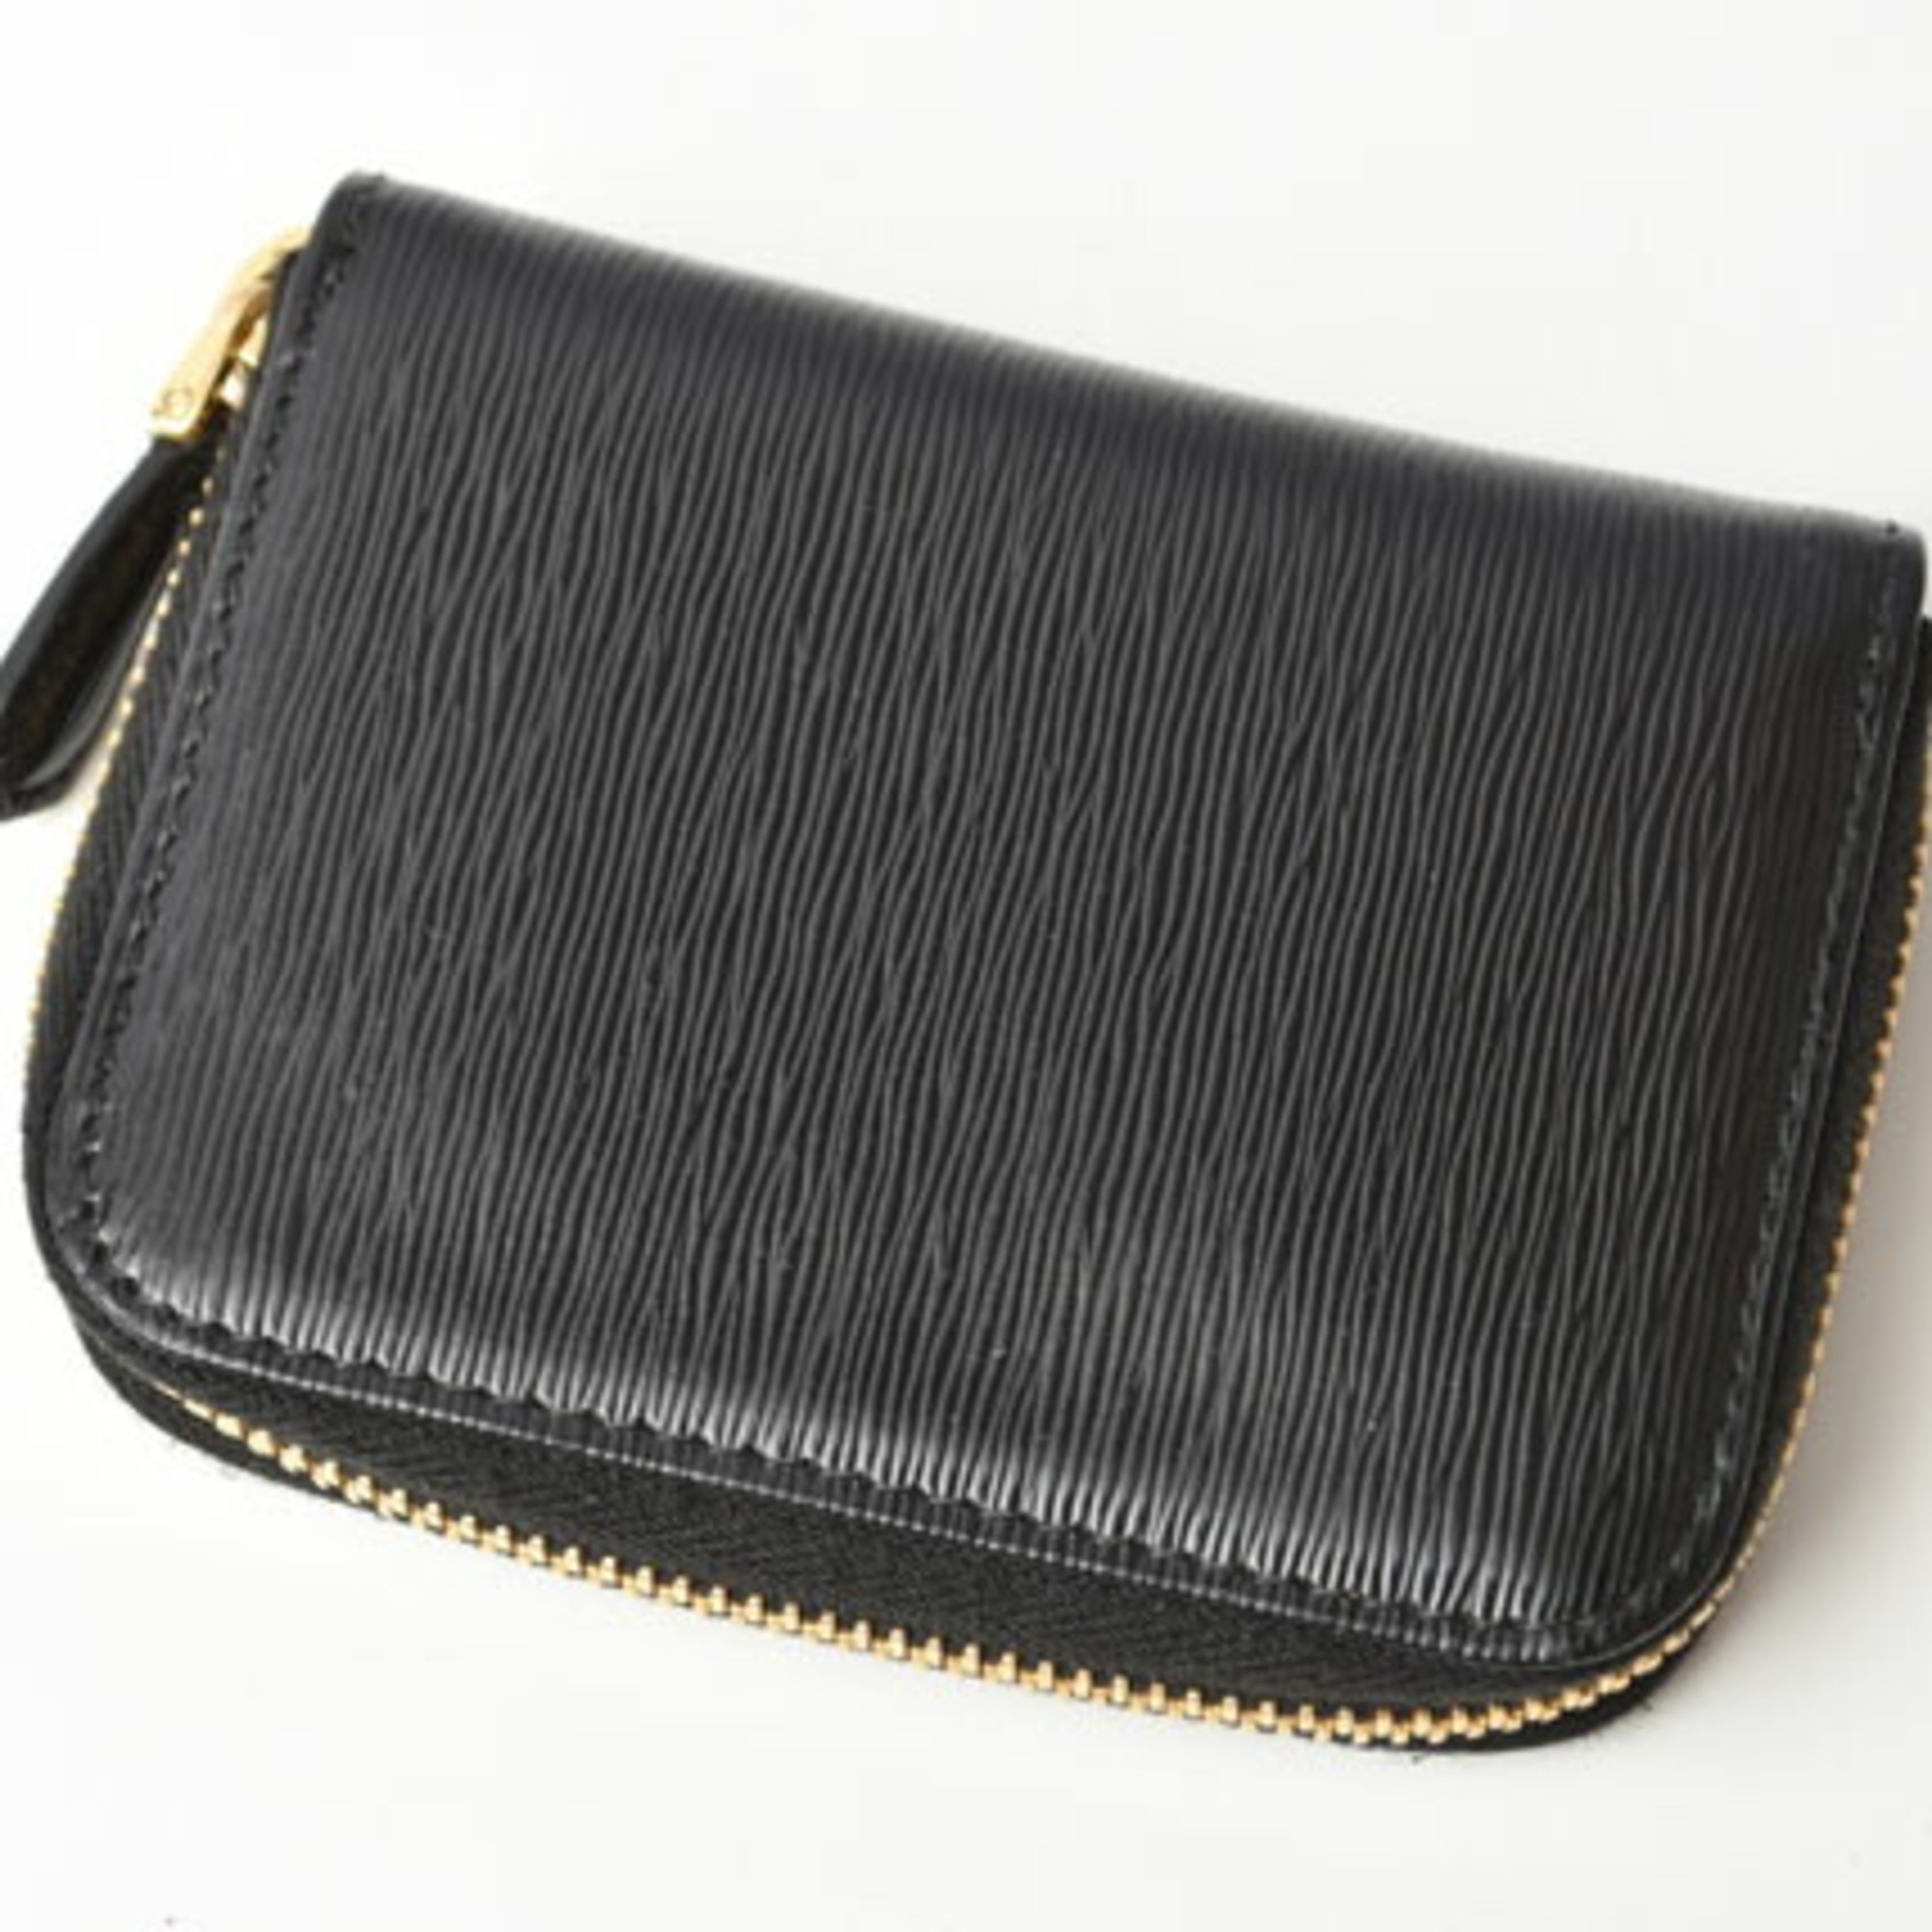 Prada wallet coin case card PRADA VITELLO MOVE leather NERO black